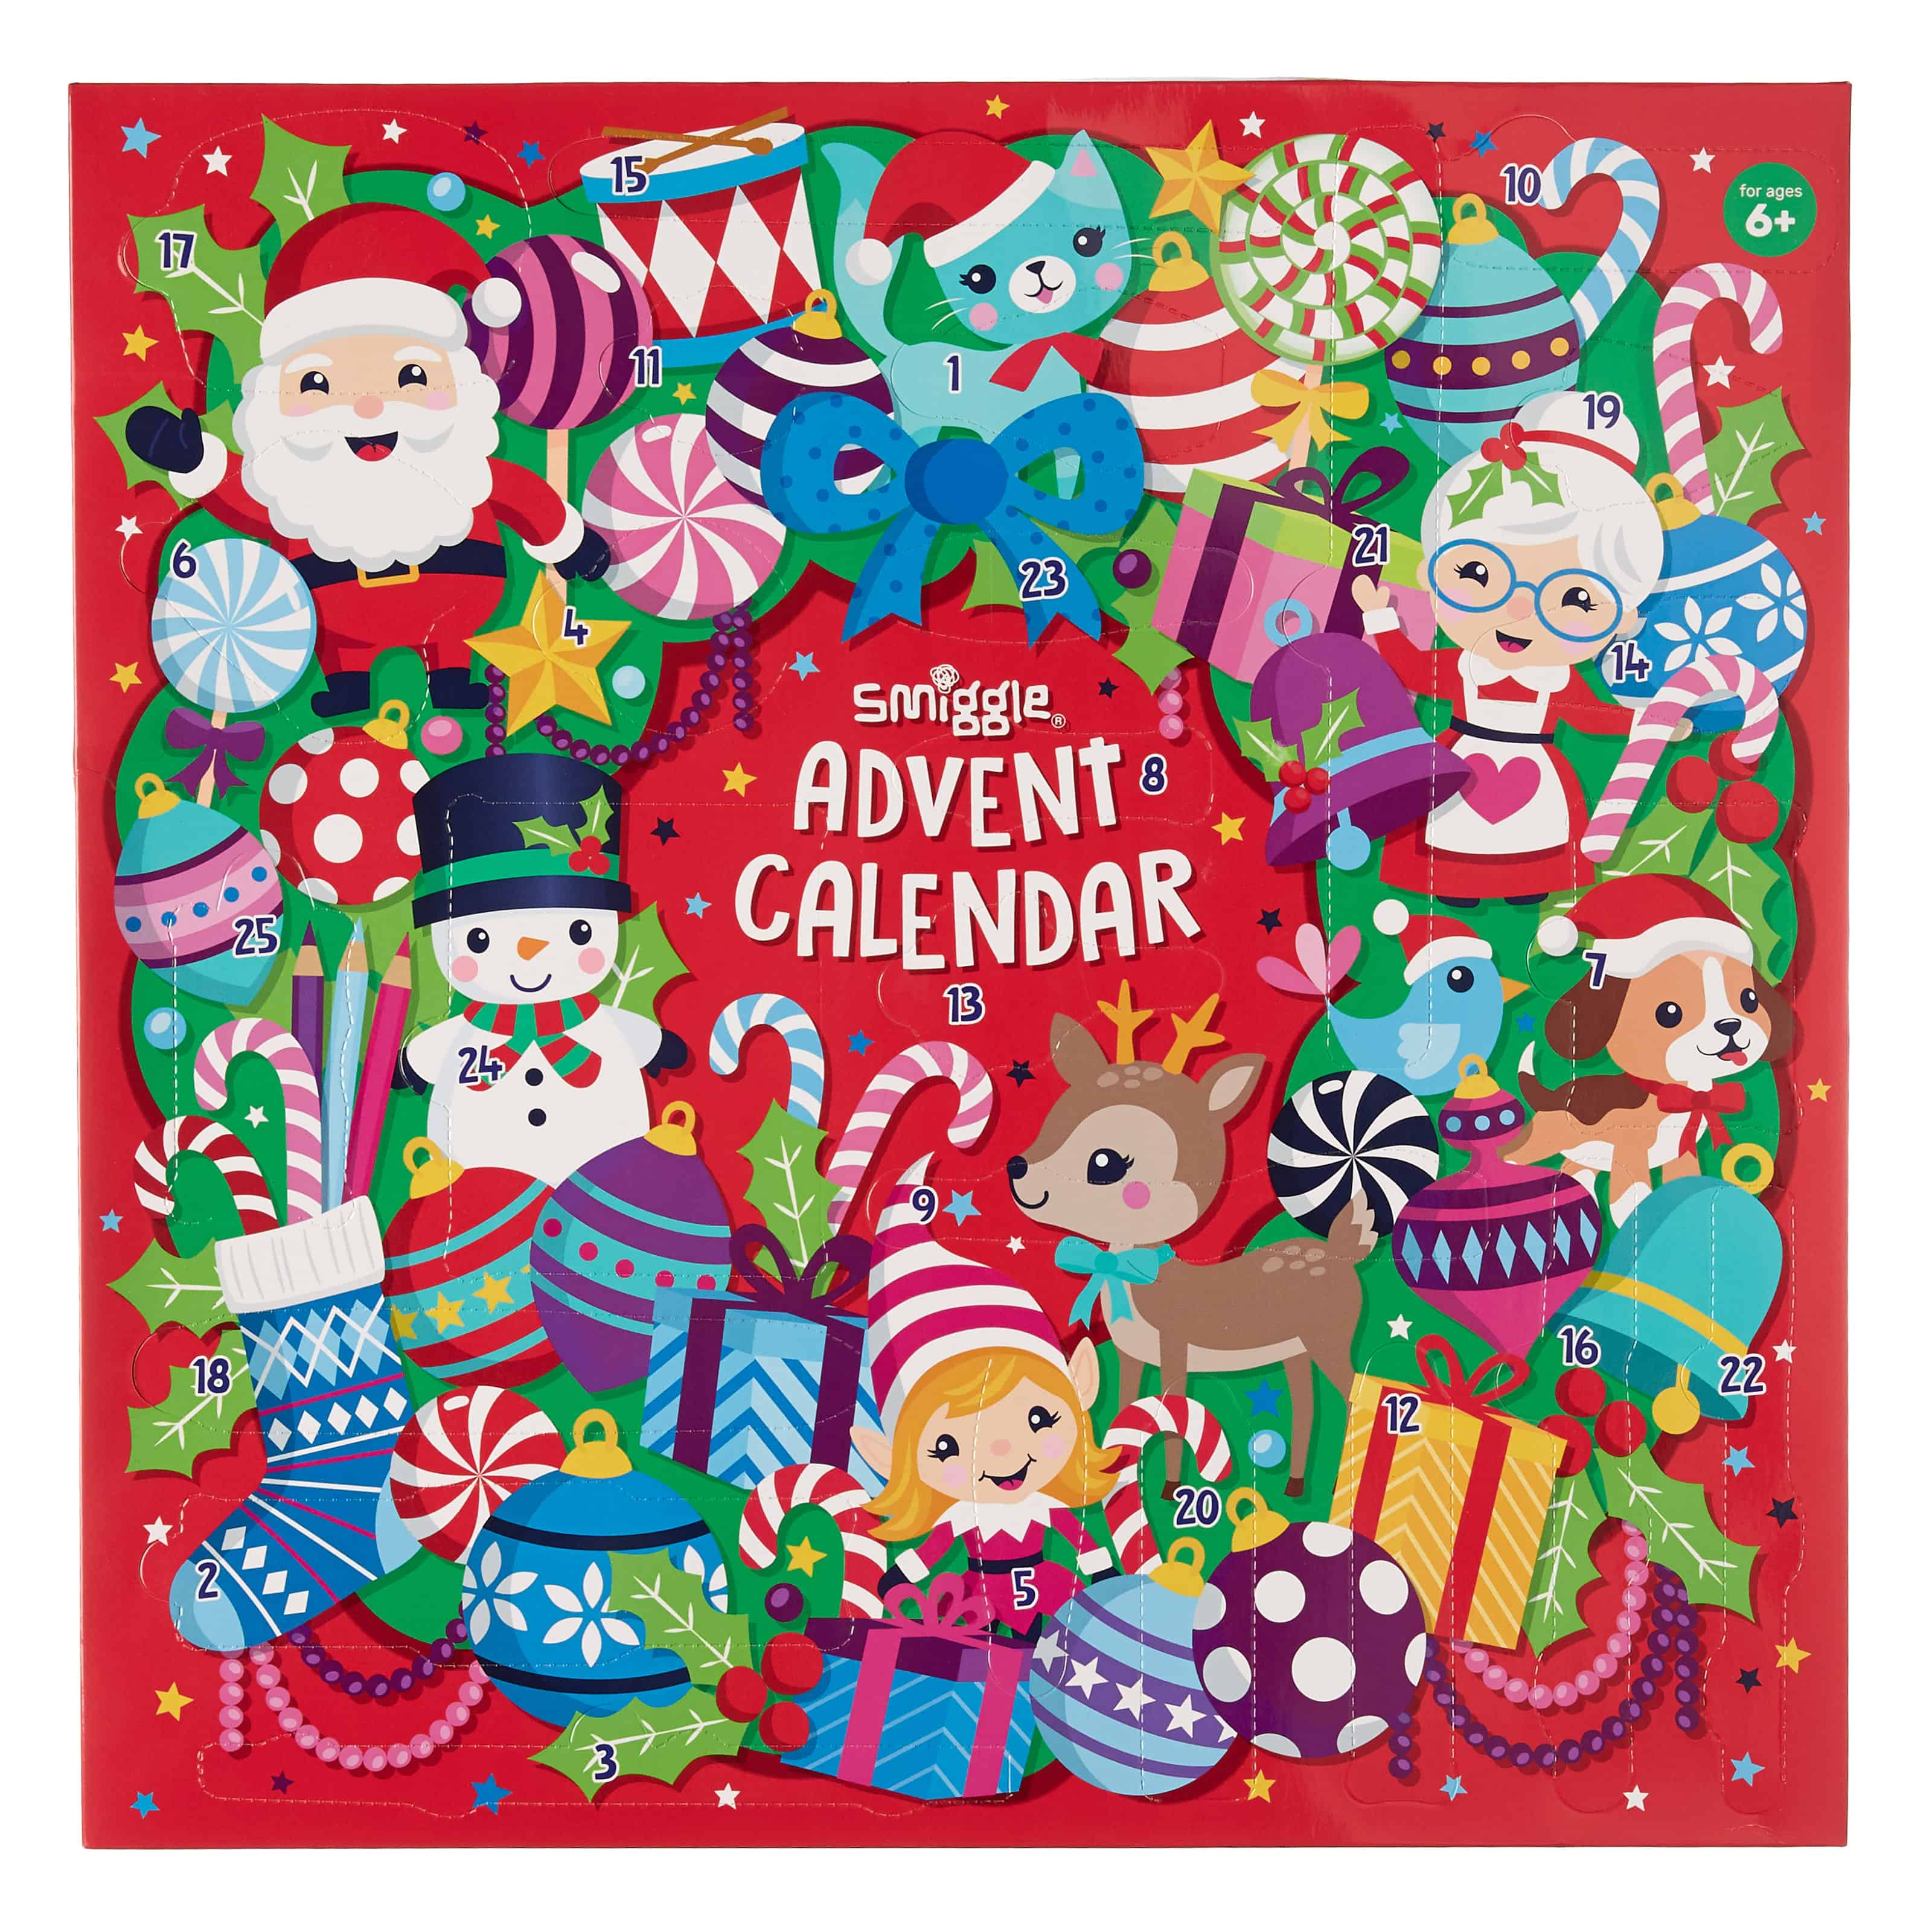 Smiggle 2018 Advent Calendar